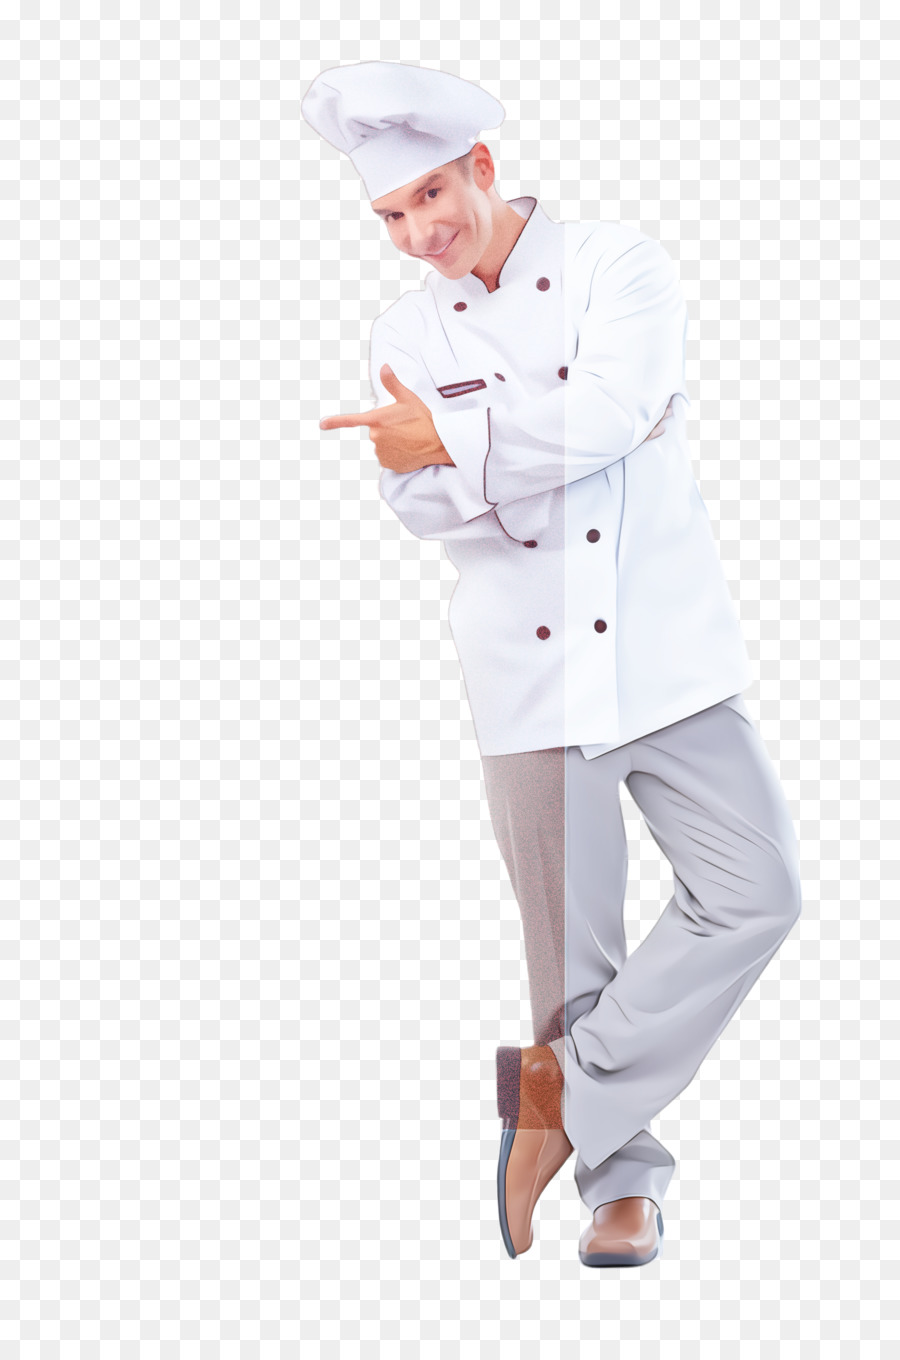 uniforme bianca cuoco cuoco uniforme cuoco - 